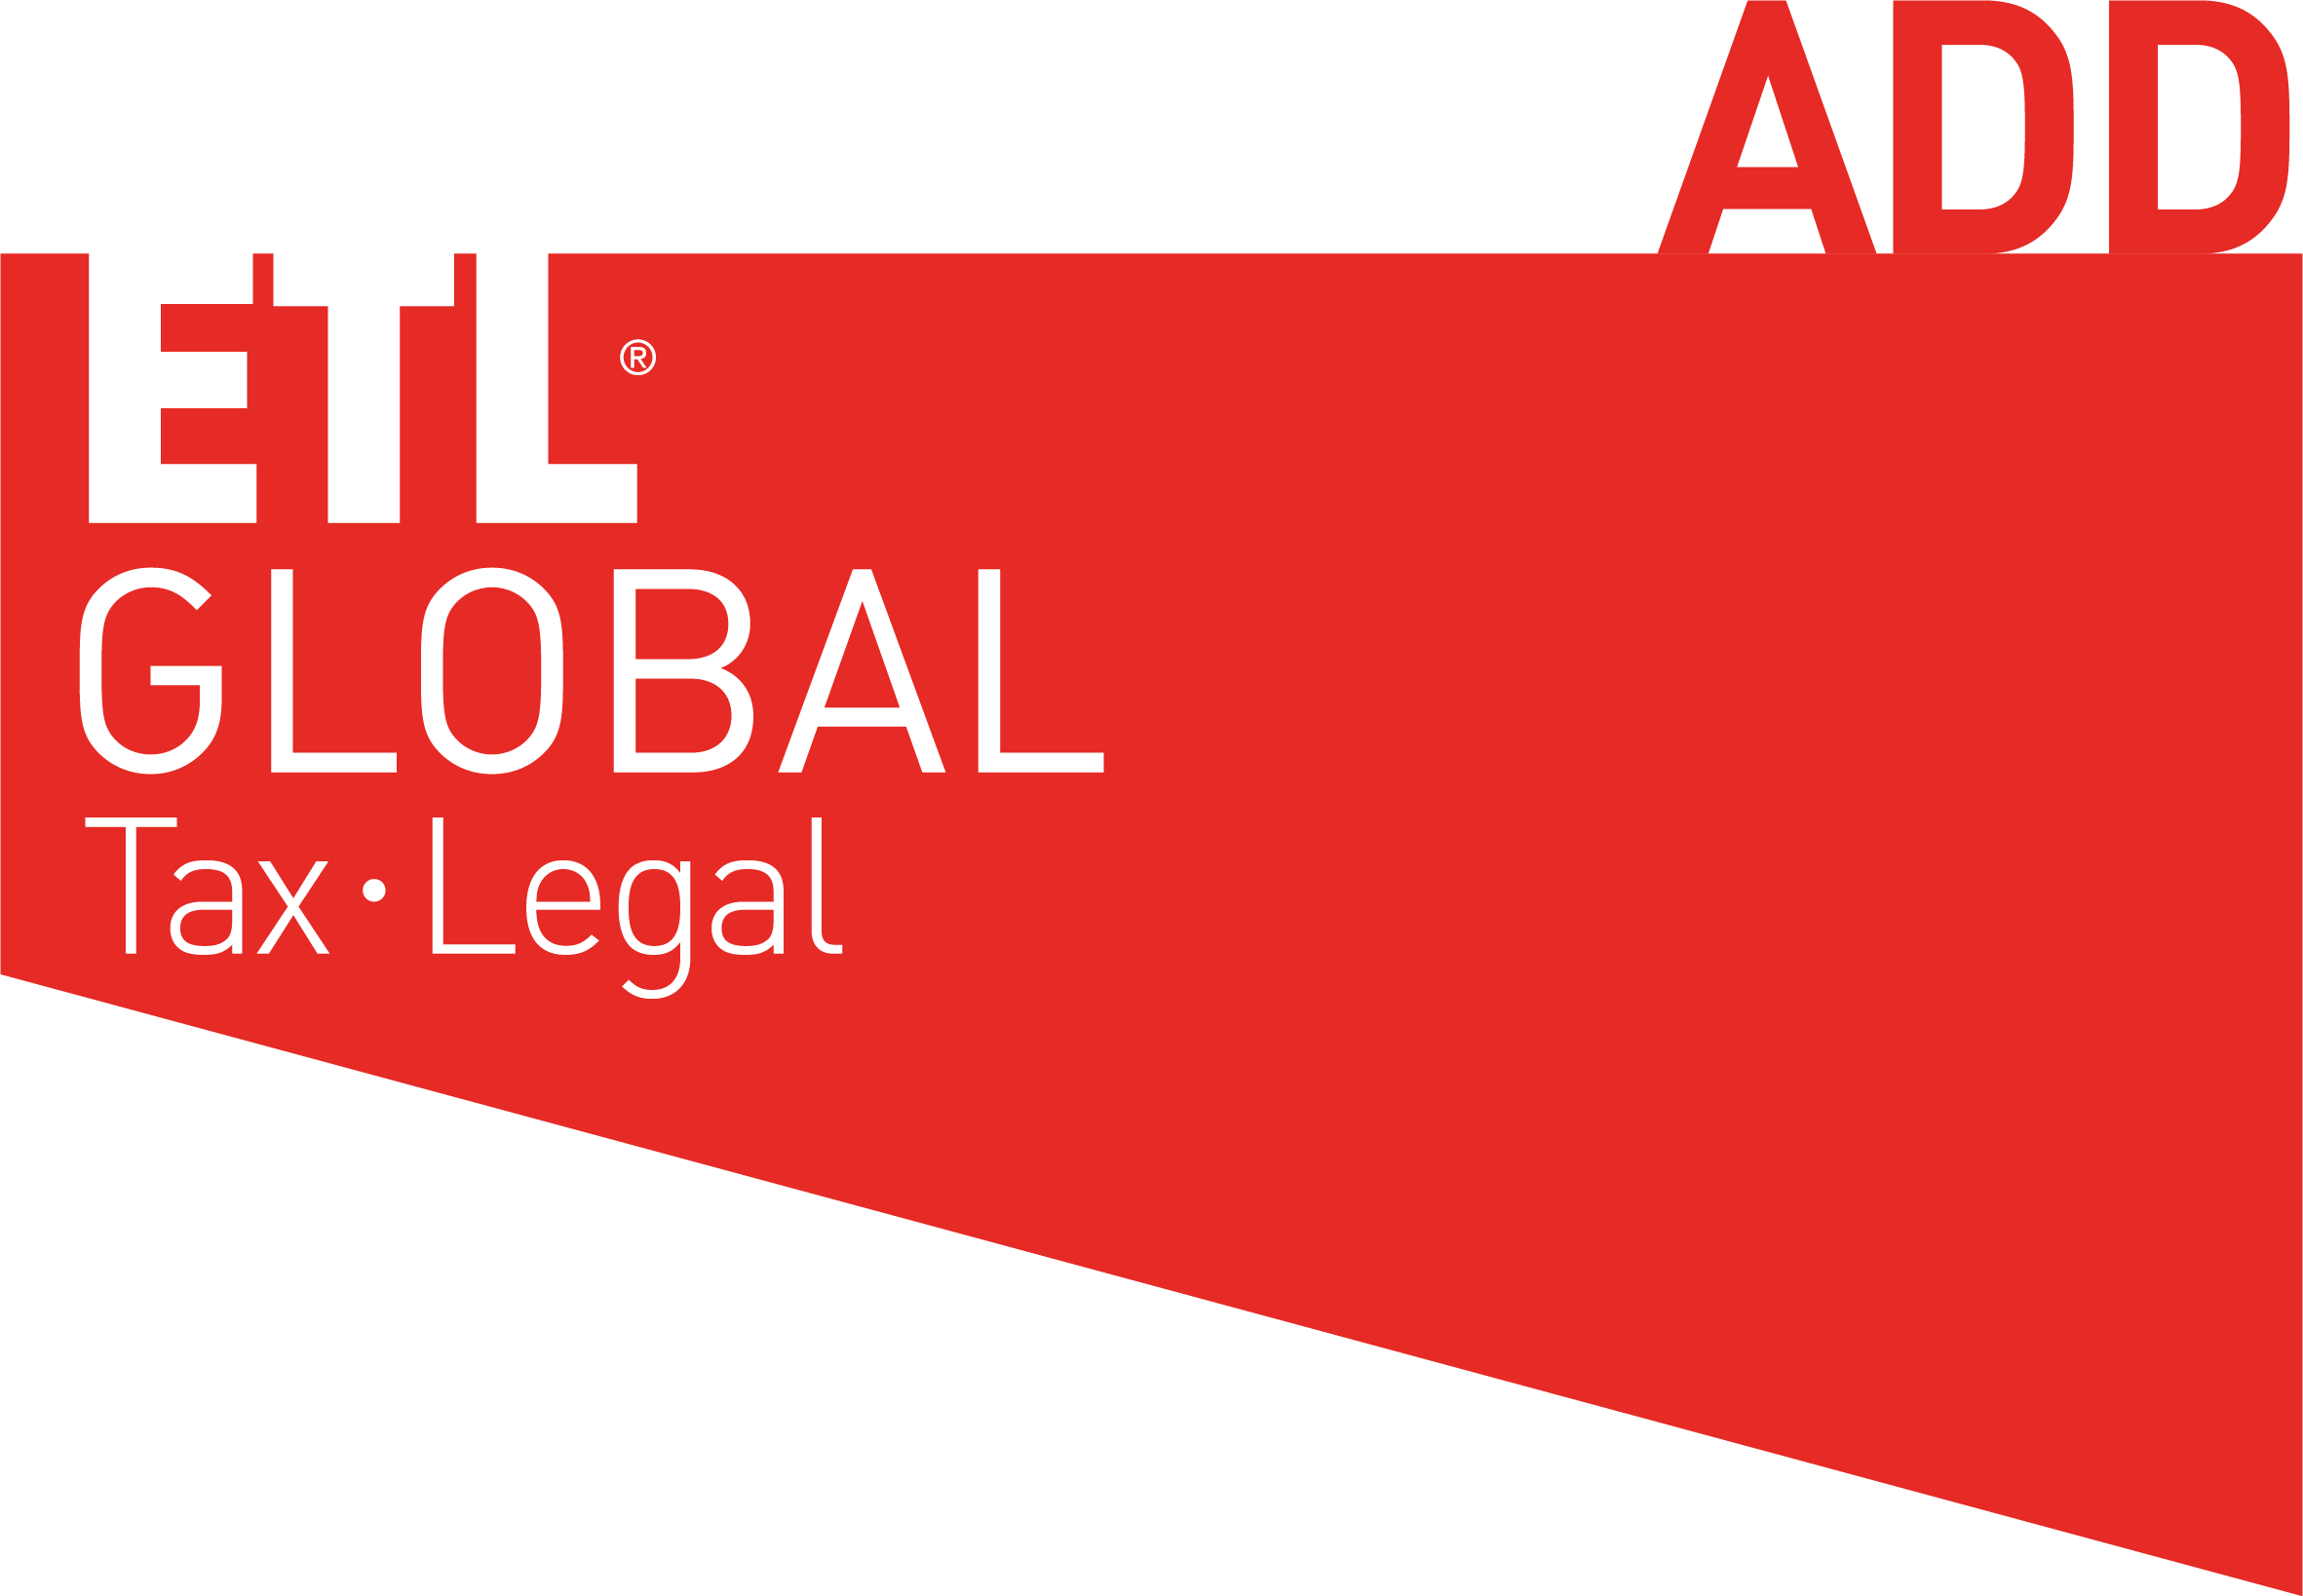 Pierre Abogados integrados en ADD ETL GLOBAL TAX LEGAL